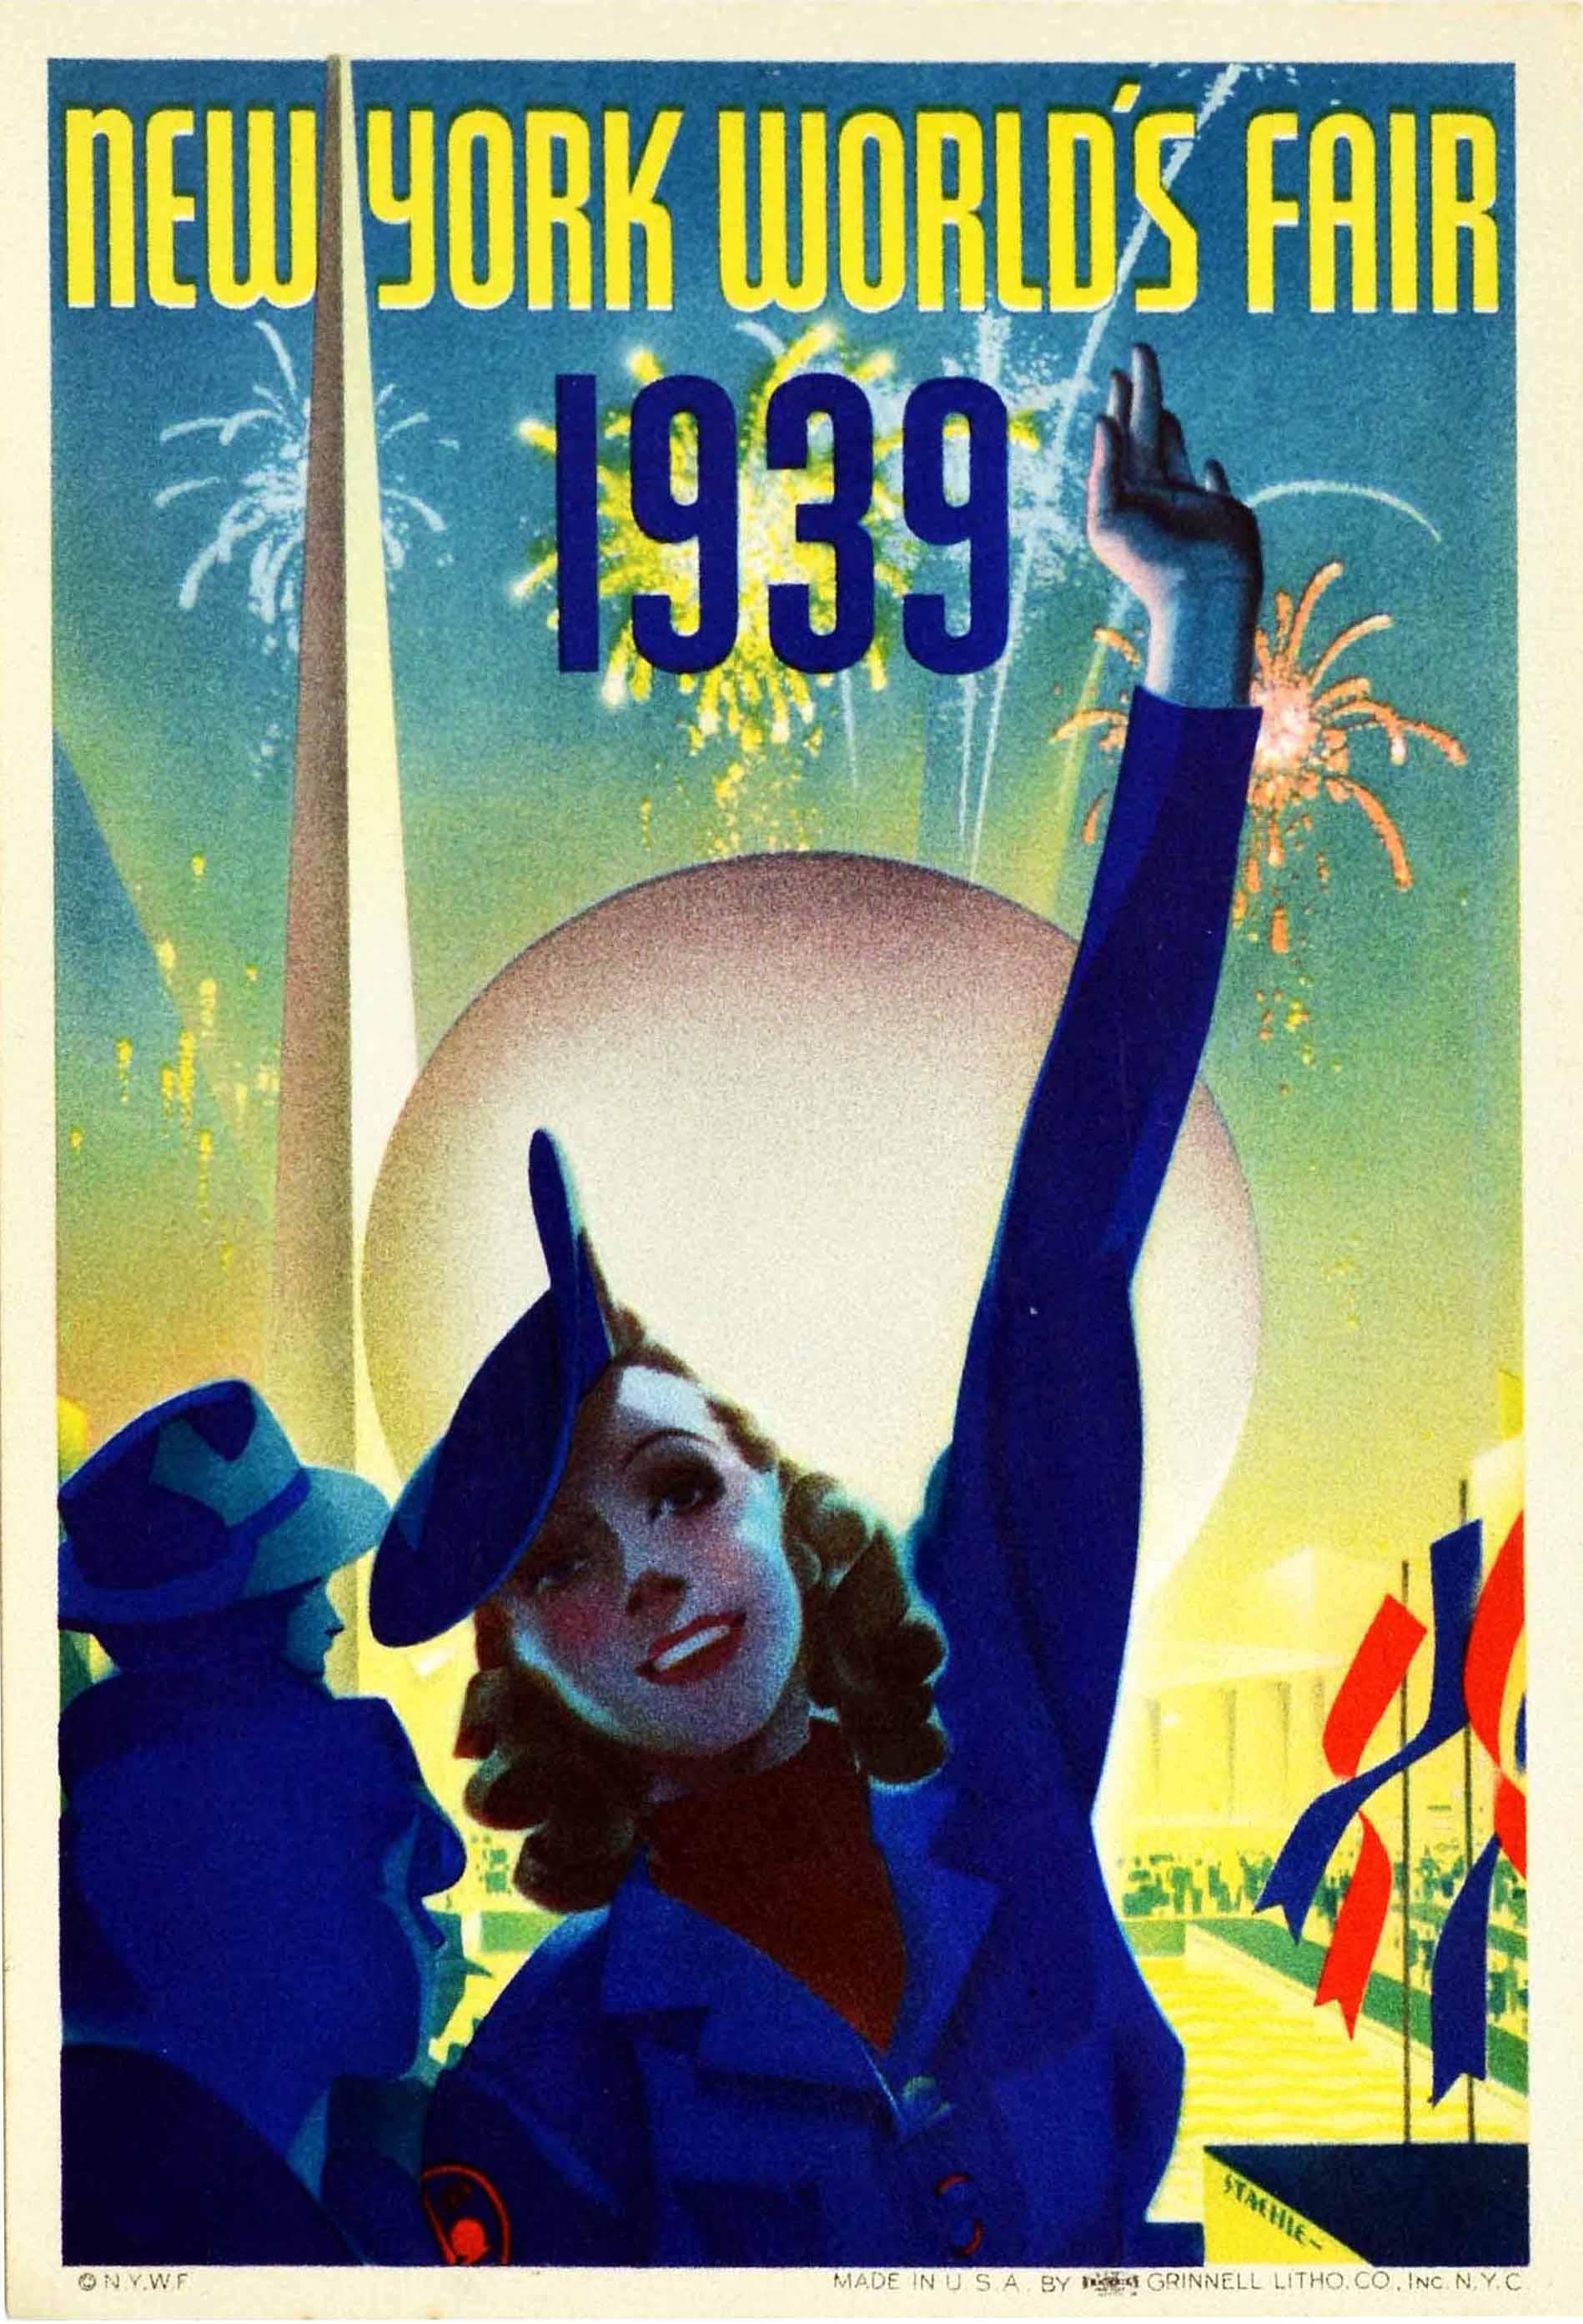 Albert Staehle Print - Original Vintage Poster New York World's Fair Modernist Trylon Perisphere Design